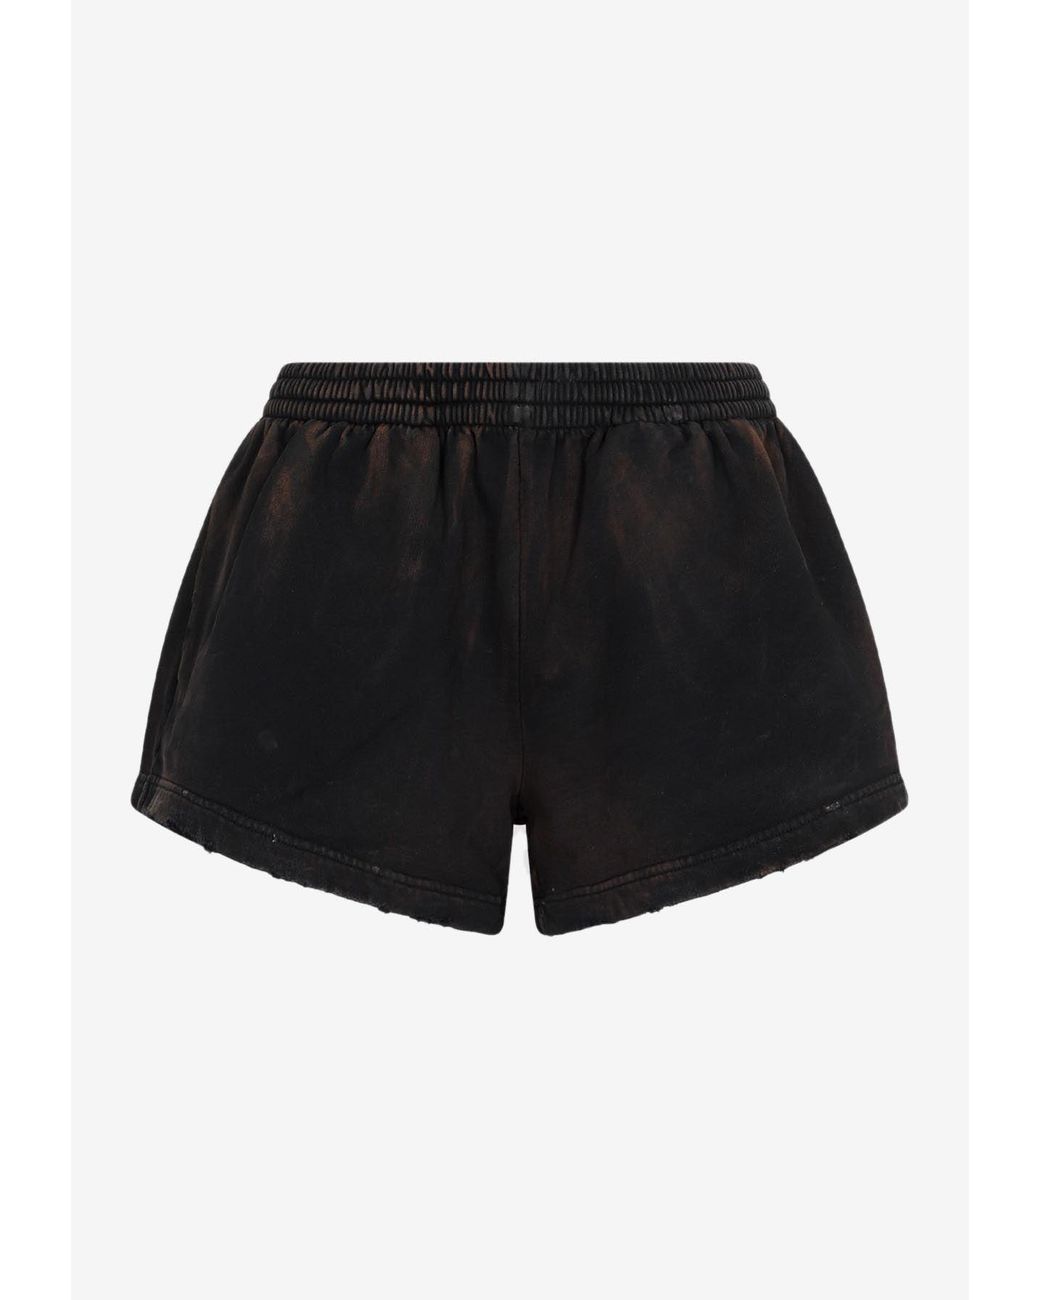 Balenciaga Distressed Mini Shorts in Black | Lyst